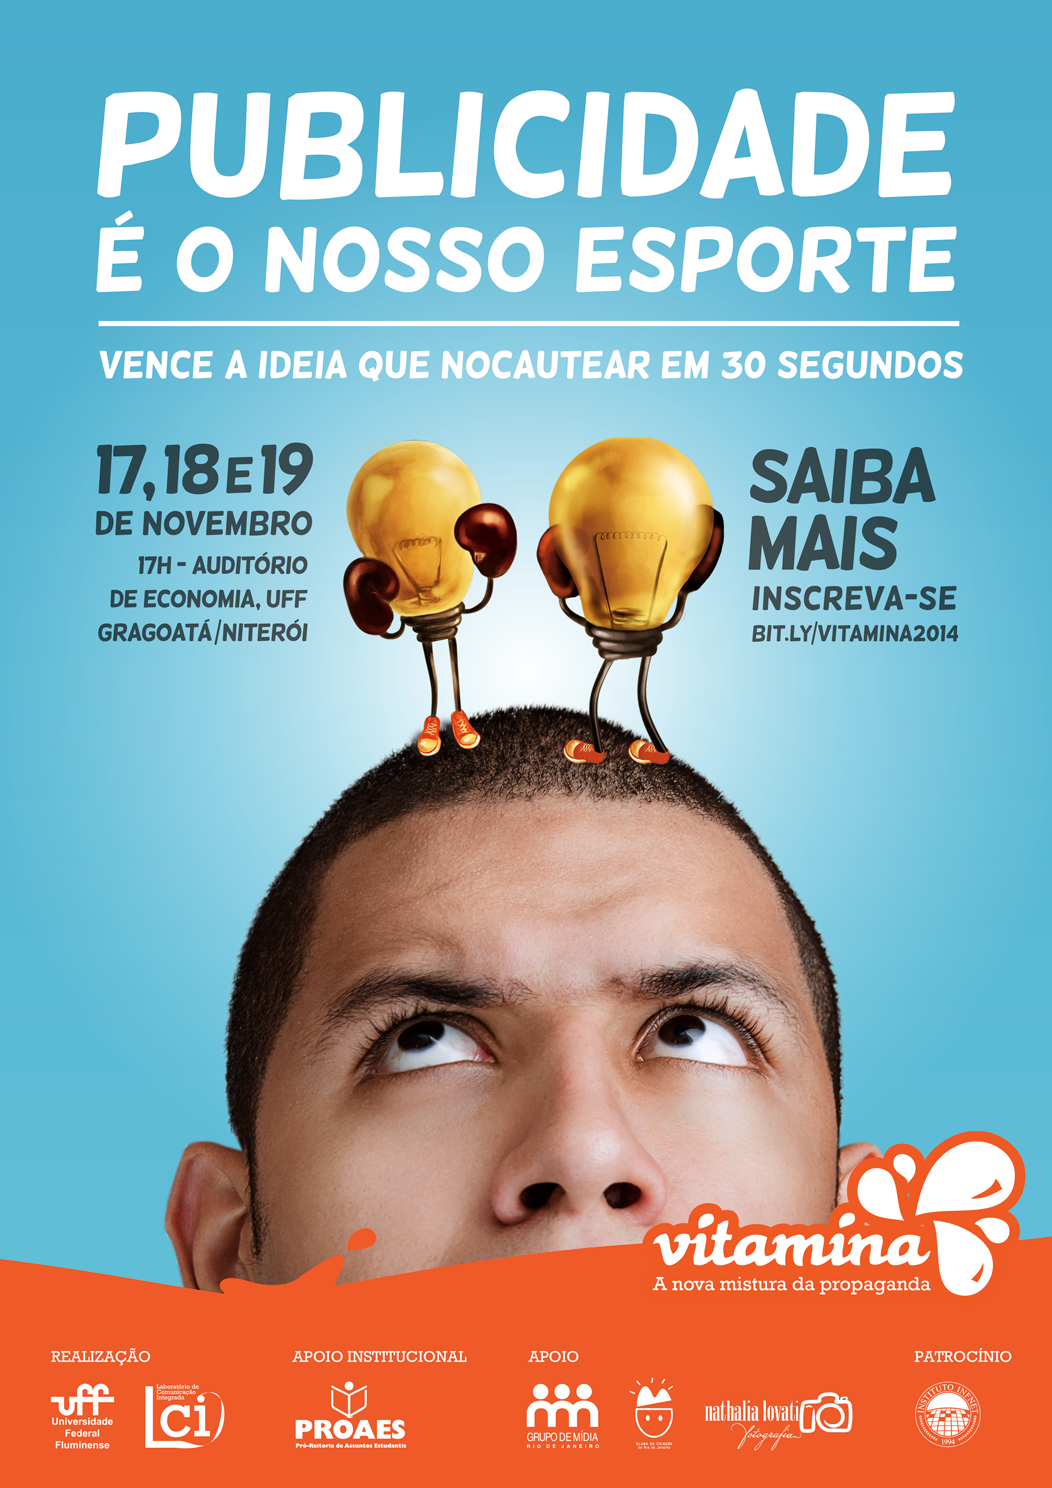 vitamina UFF publicidade Esporte sports